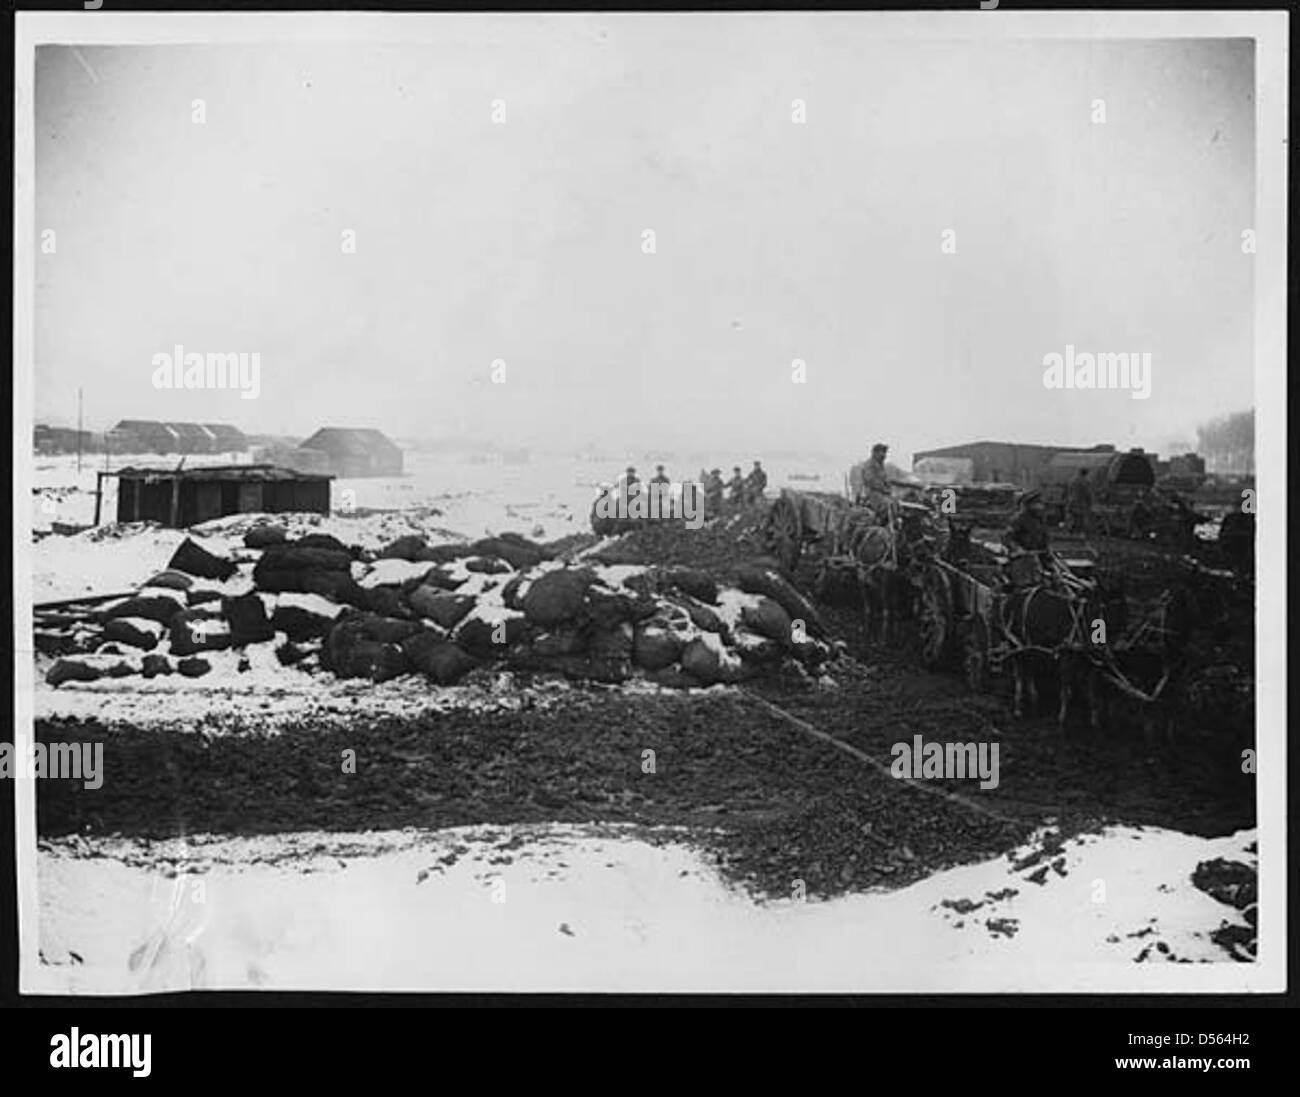 Coal dump in the snow Stock Photo